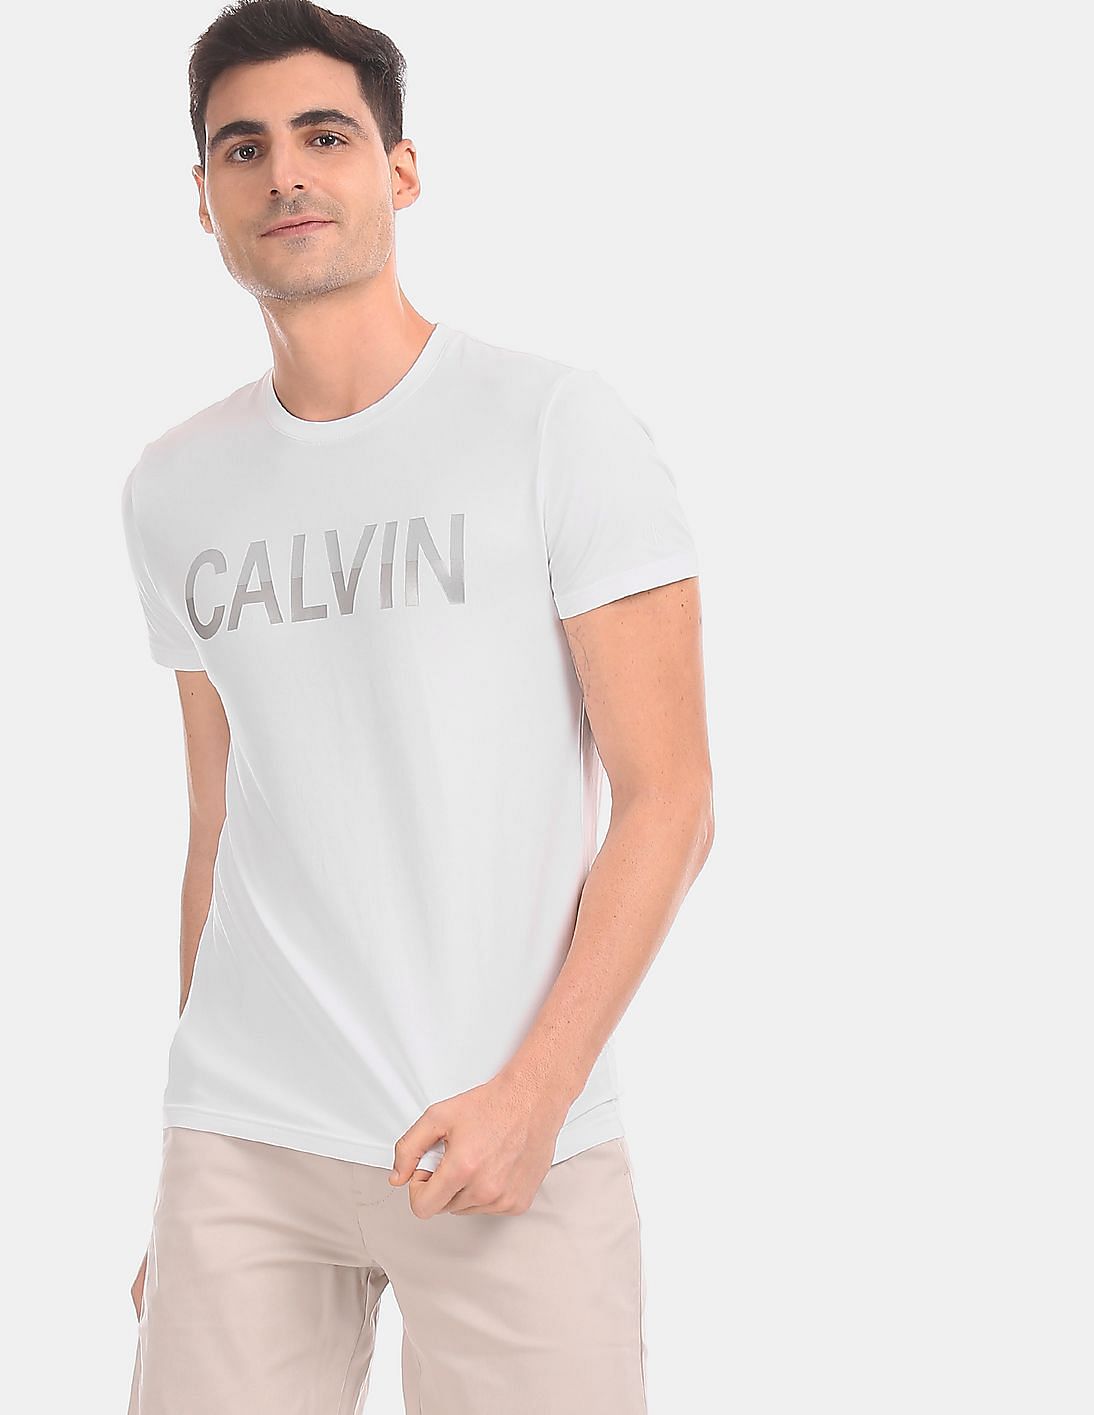 Buy Calvin Klein Men White Slim Fit Brand Logo T-Shirt - NNNOW.com